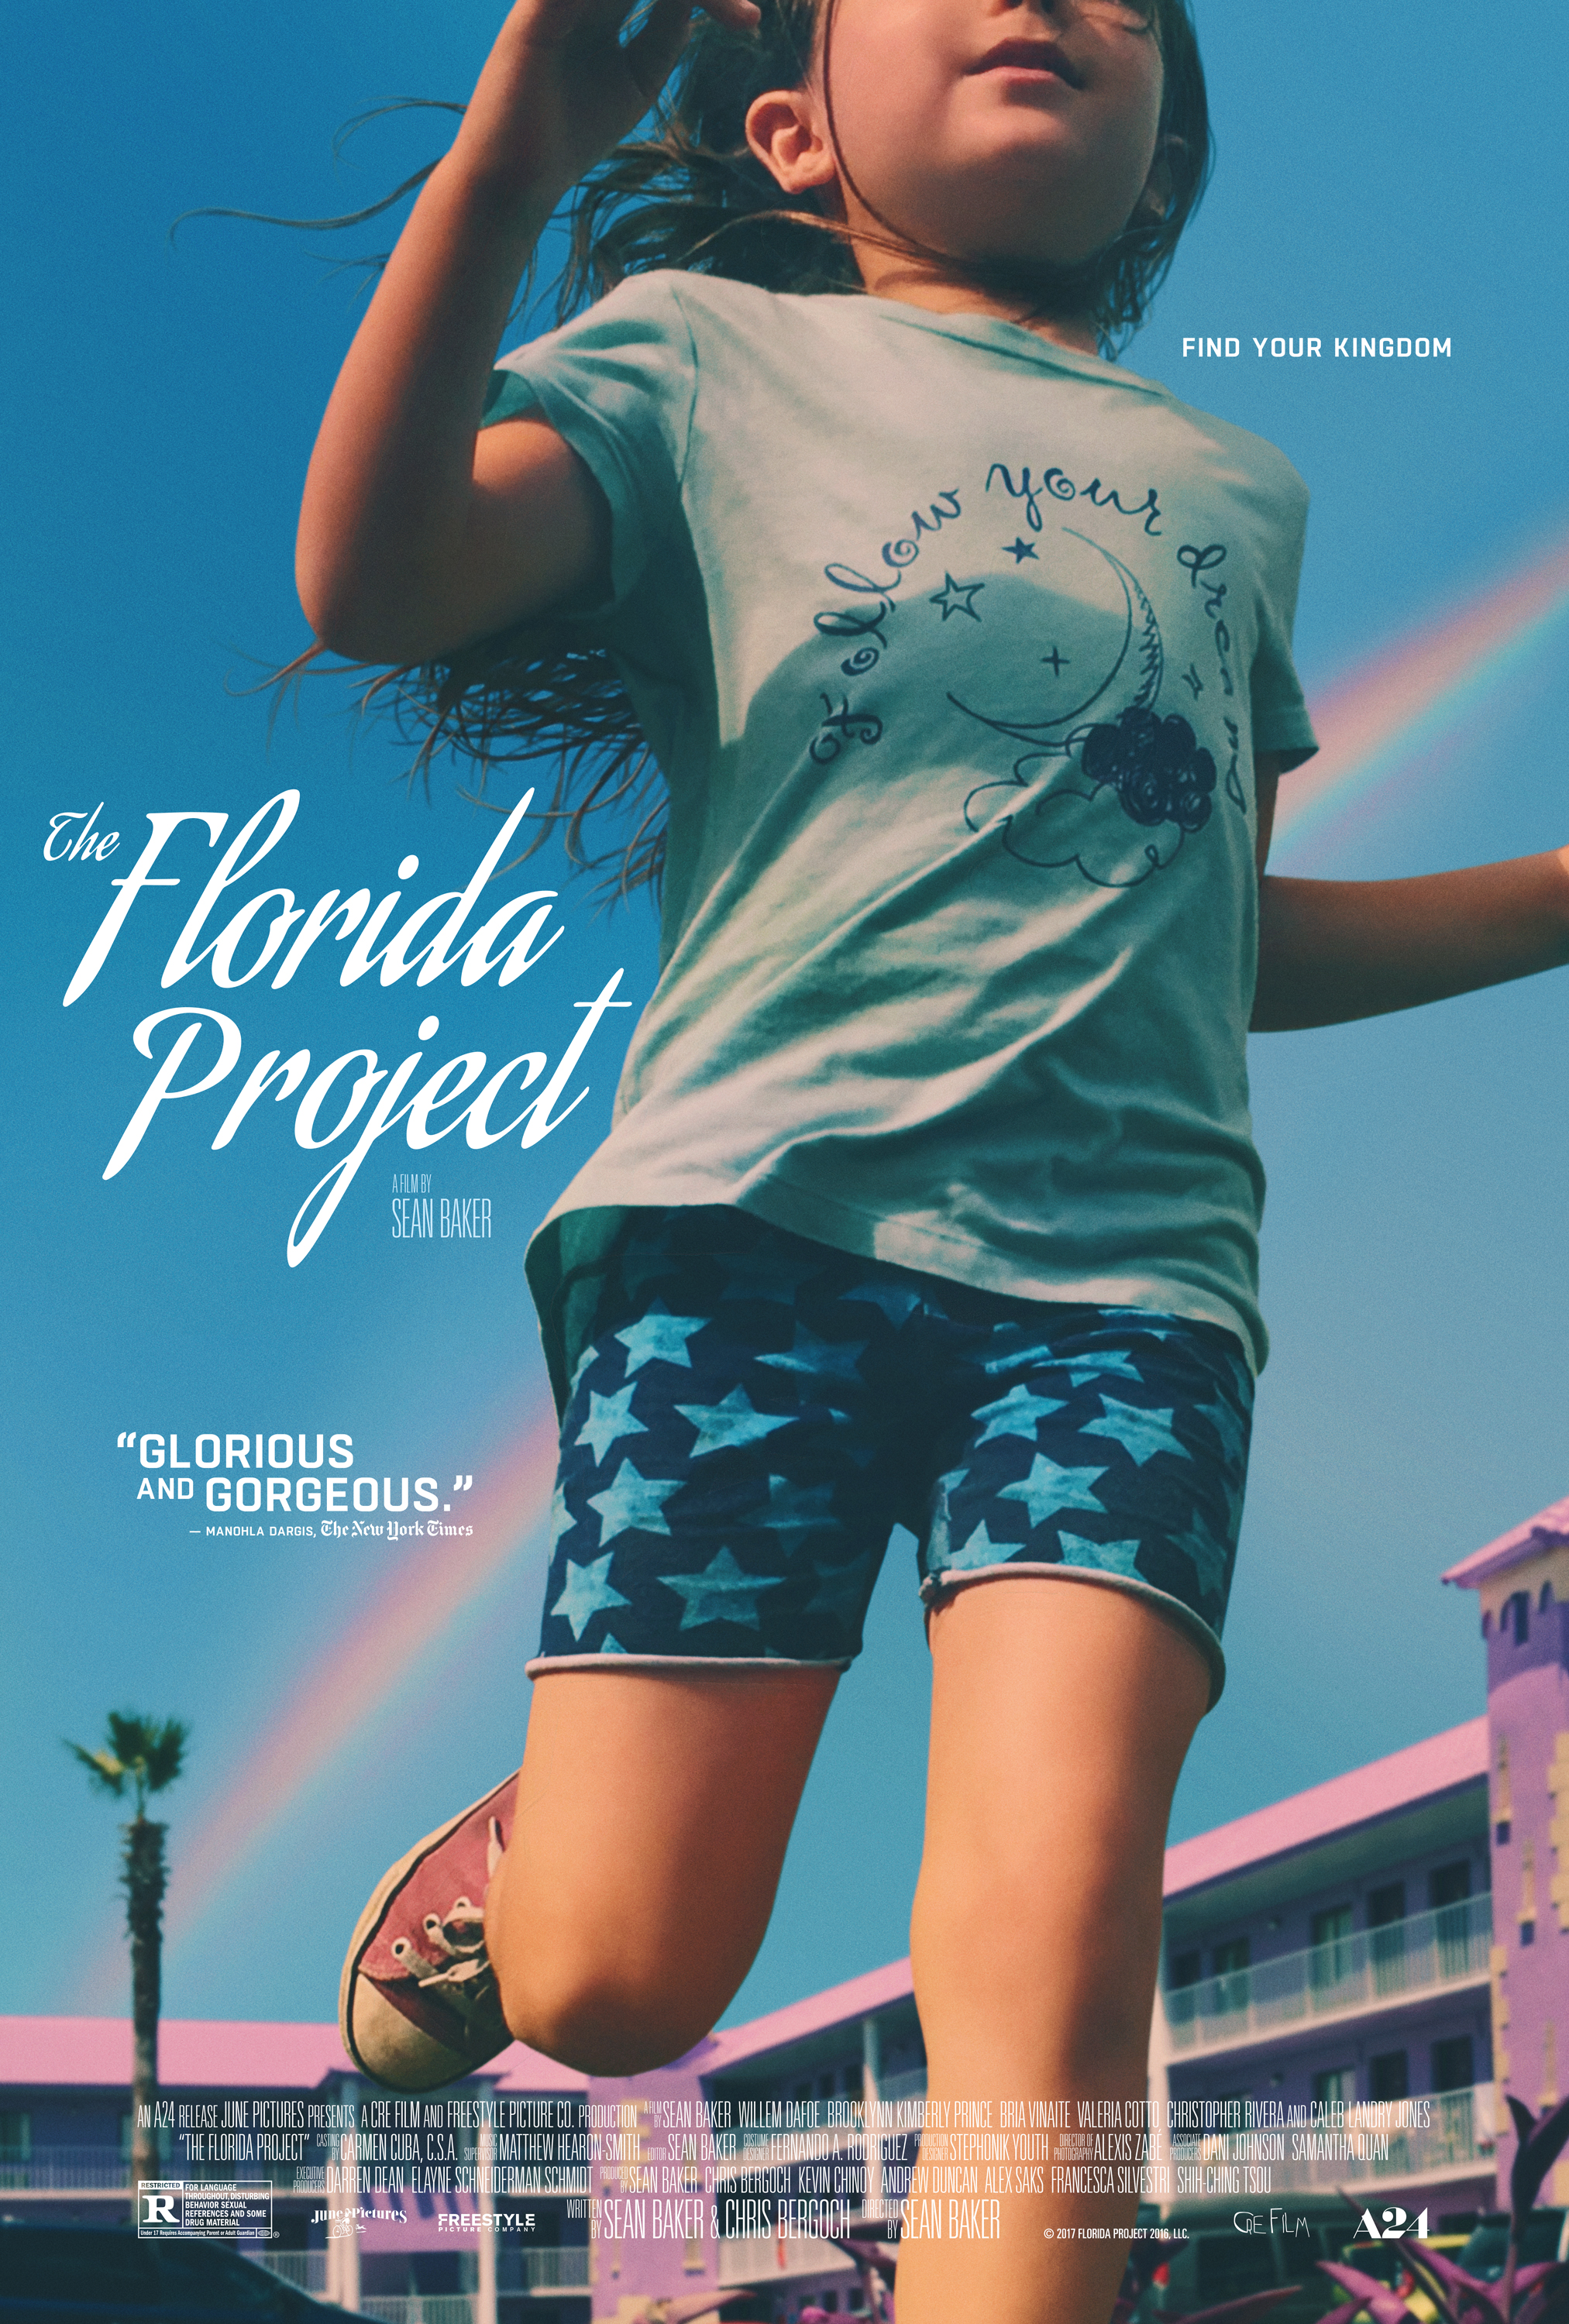 Nonton film The Florida Project layarkaca21 indoxx1 ganool online streaming terbaru